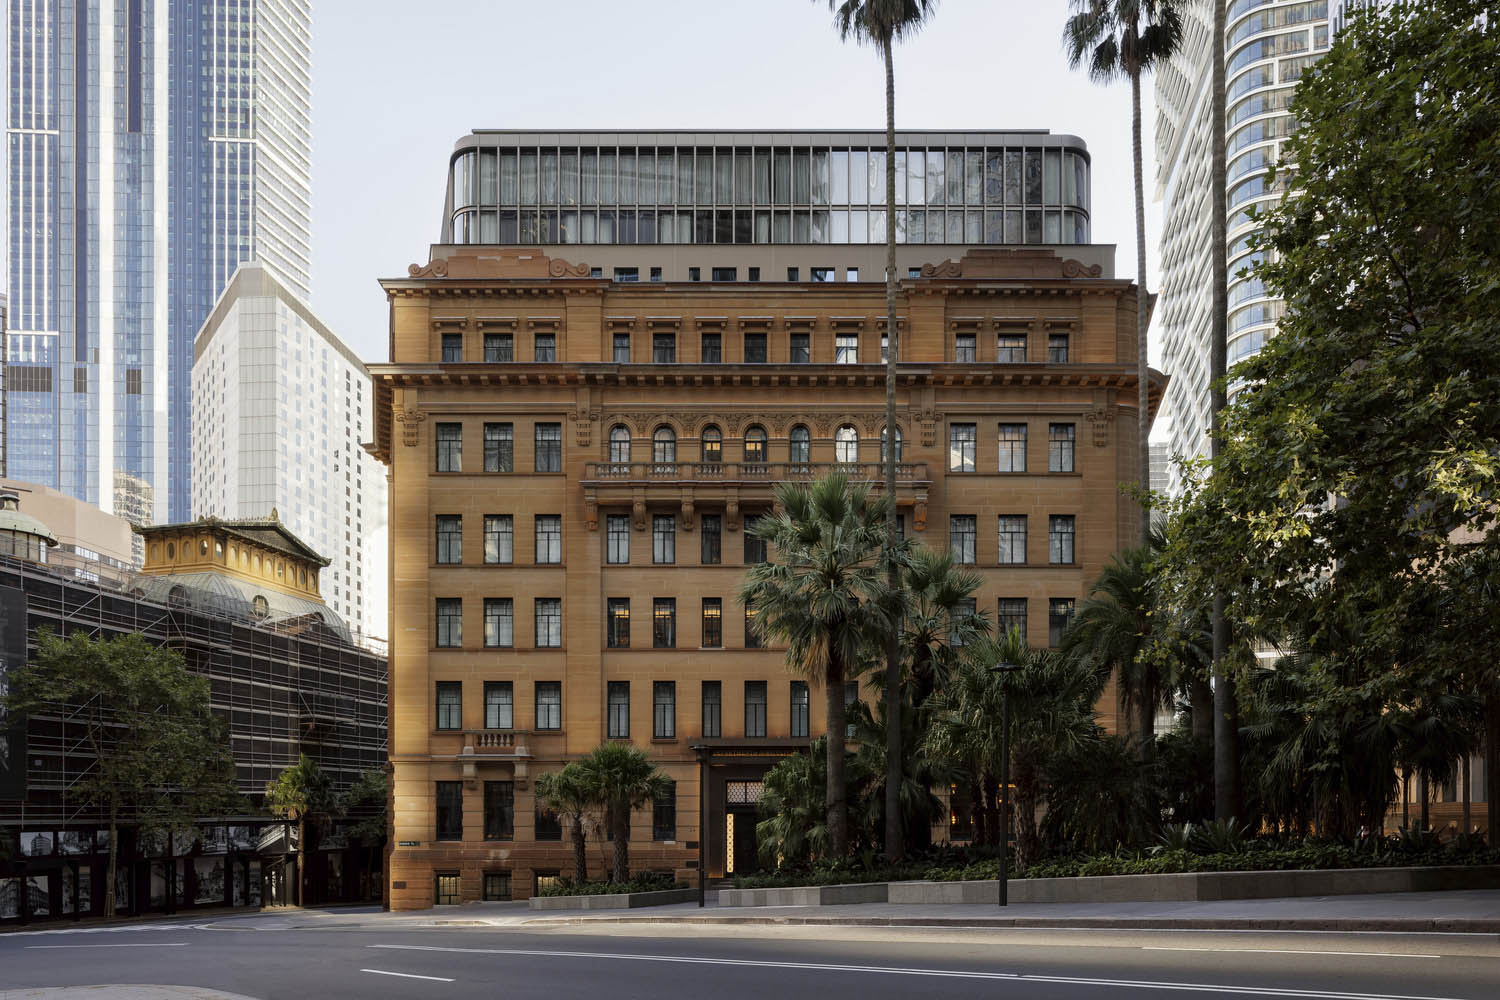 Make Architects,悉尼,Capella Sydney Hotel,BAR Studio,嘉佩乐度假酒店,度假酒店设计,酒店设计案例,国外酒店设计,嘉佩乐Capella